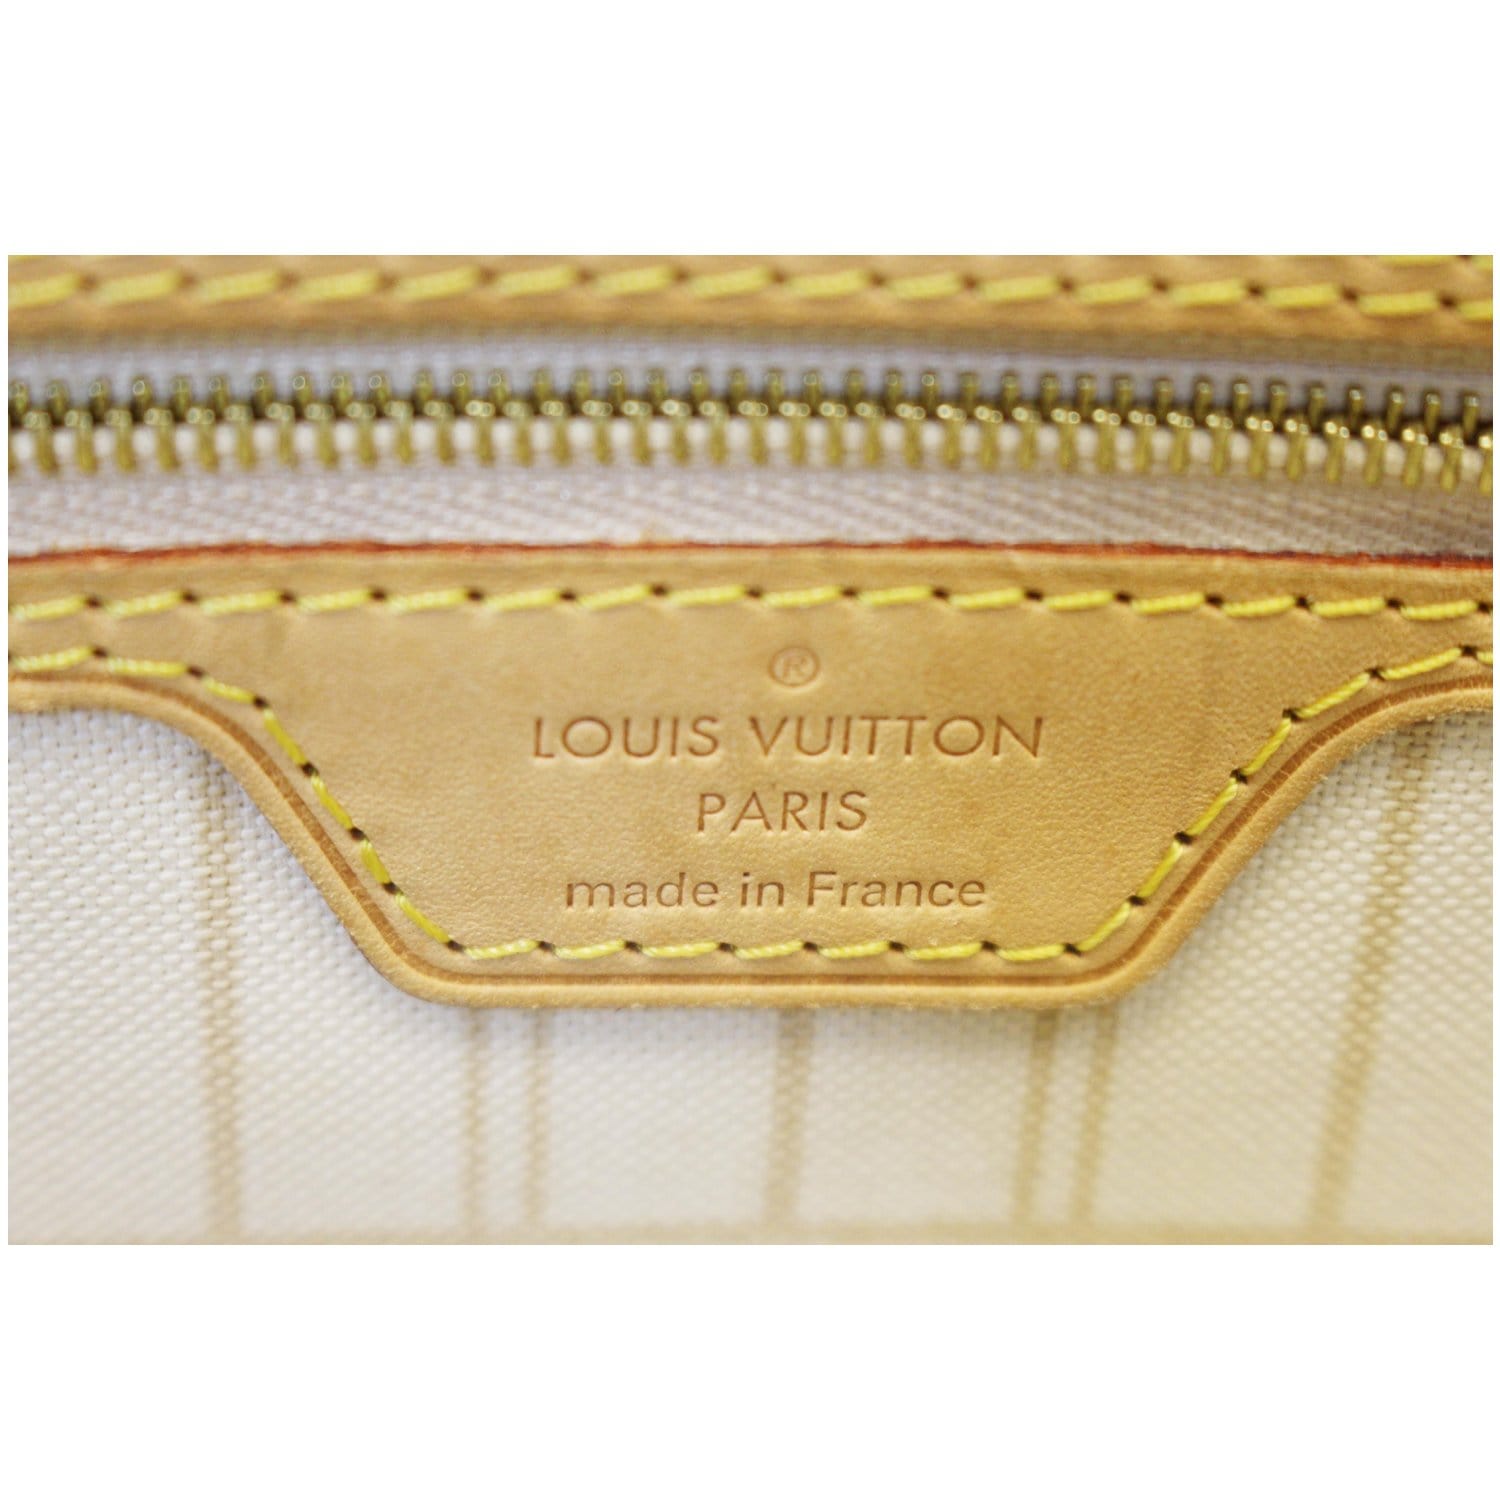 LOUIS VUITTON Hand Tote Bag LV Neverfull PM Damier Azur France 48180060100 P